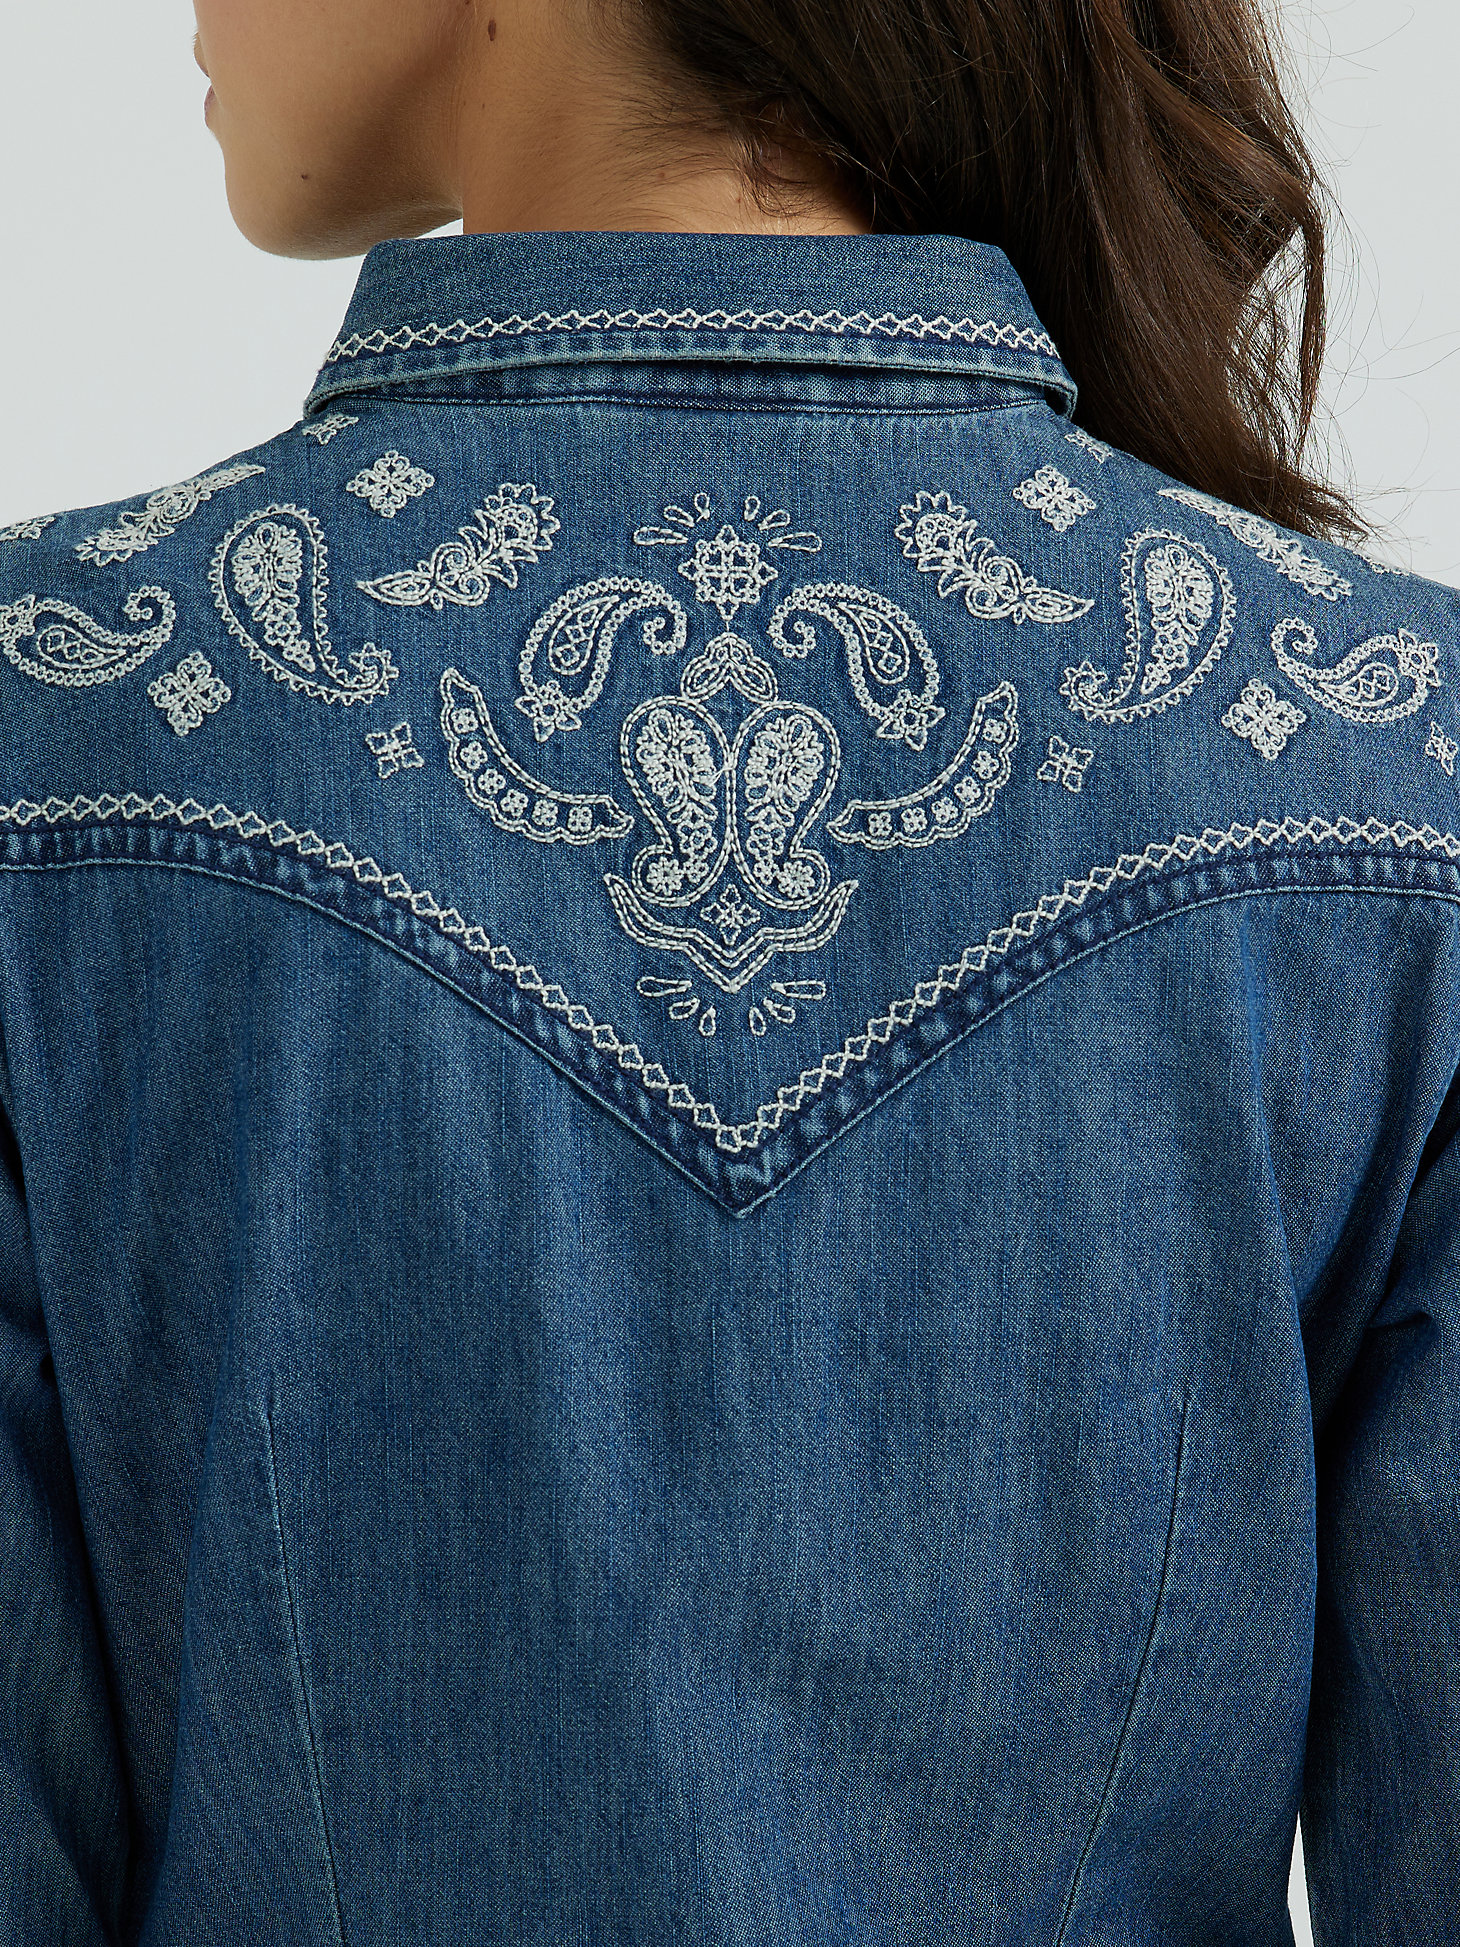 Women's Wrangler Embroidered Yoke Denim Snap Shirt in Indigo alternative view 3